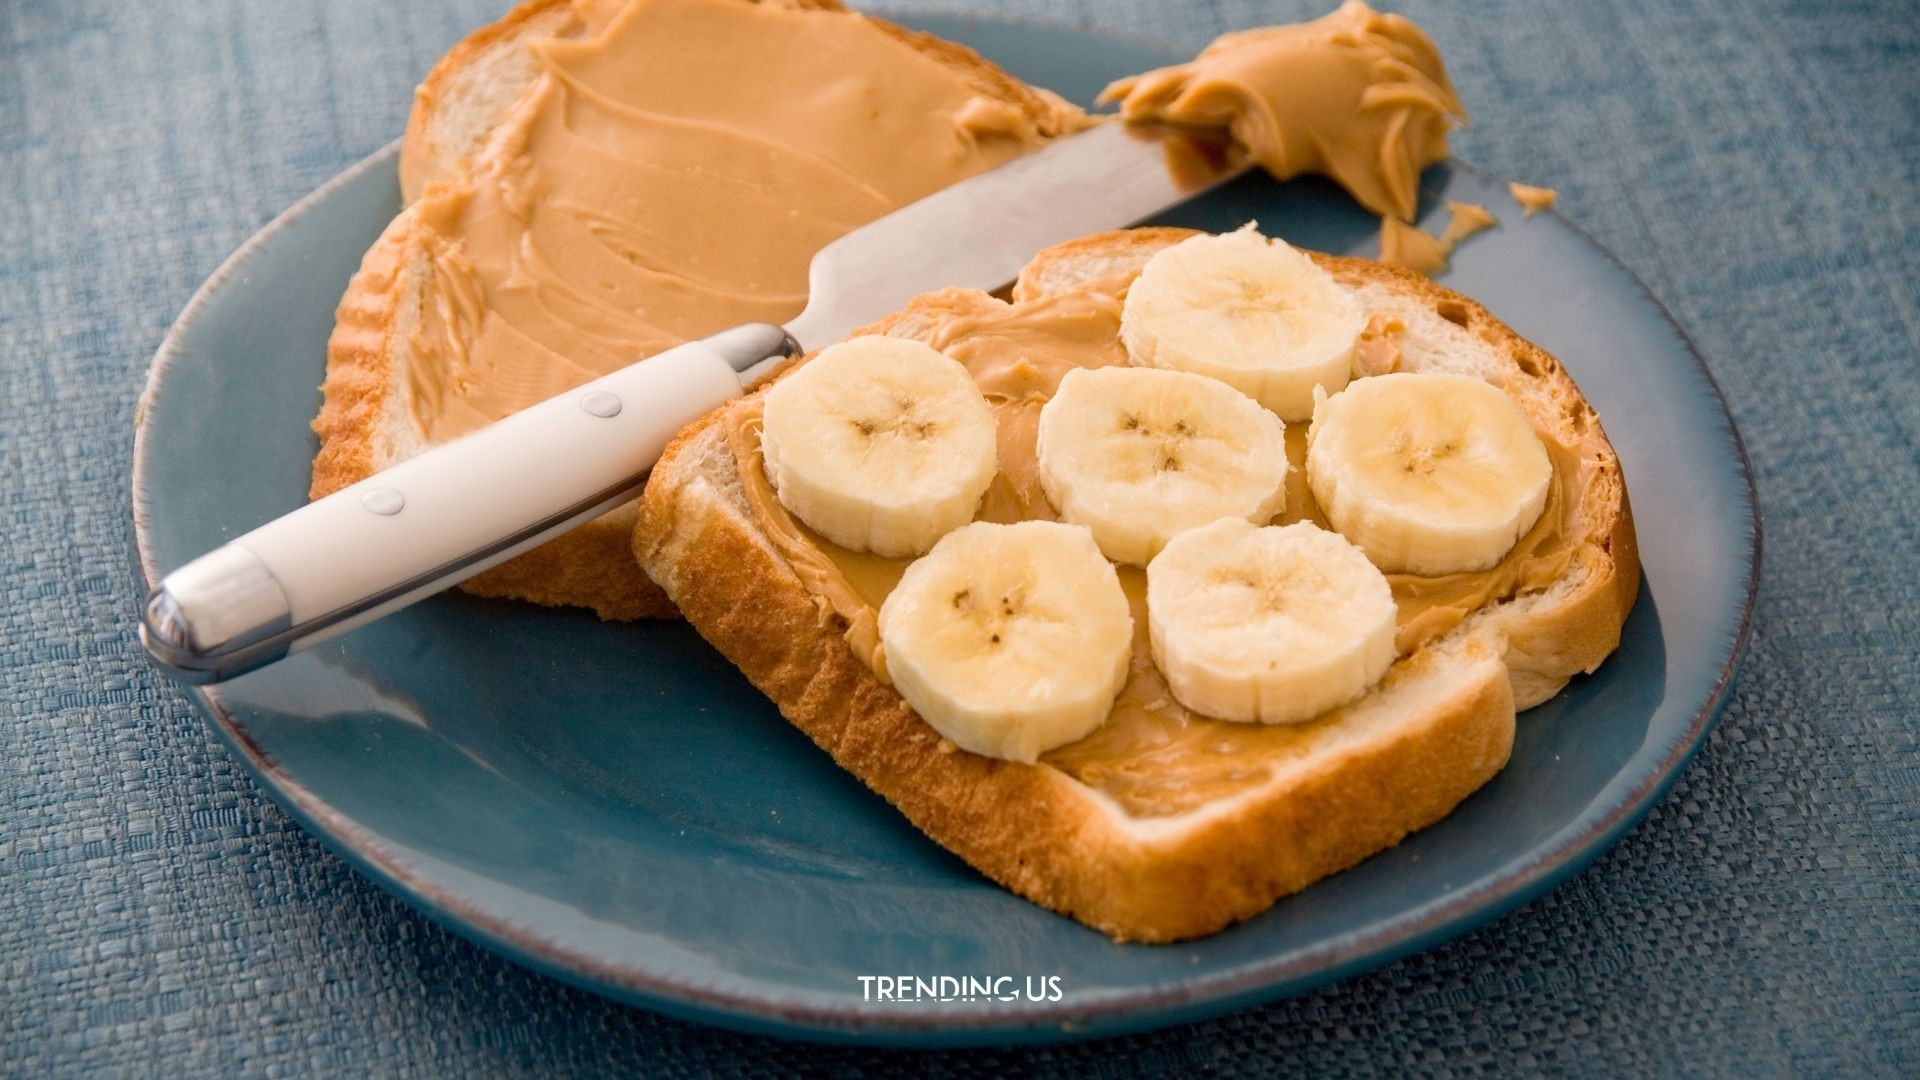 Banana and peanut butter sandwich